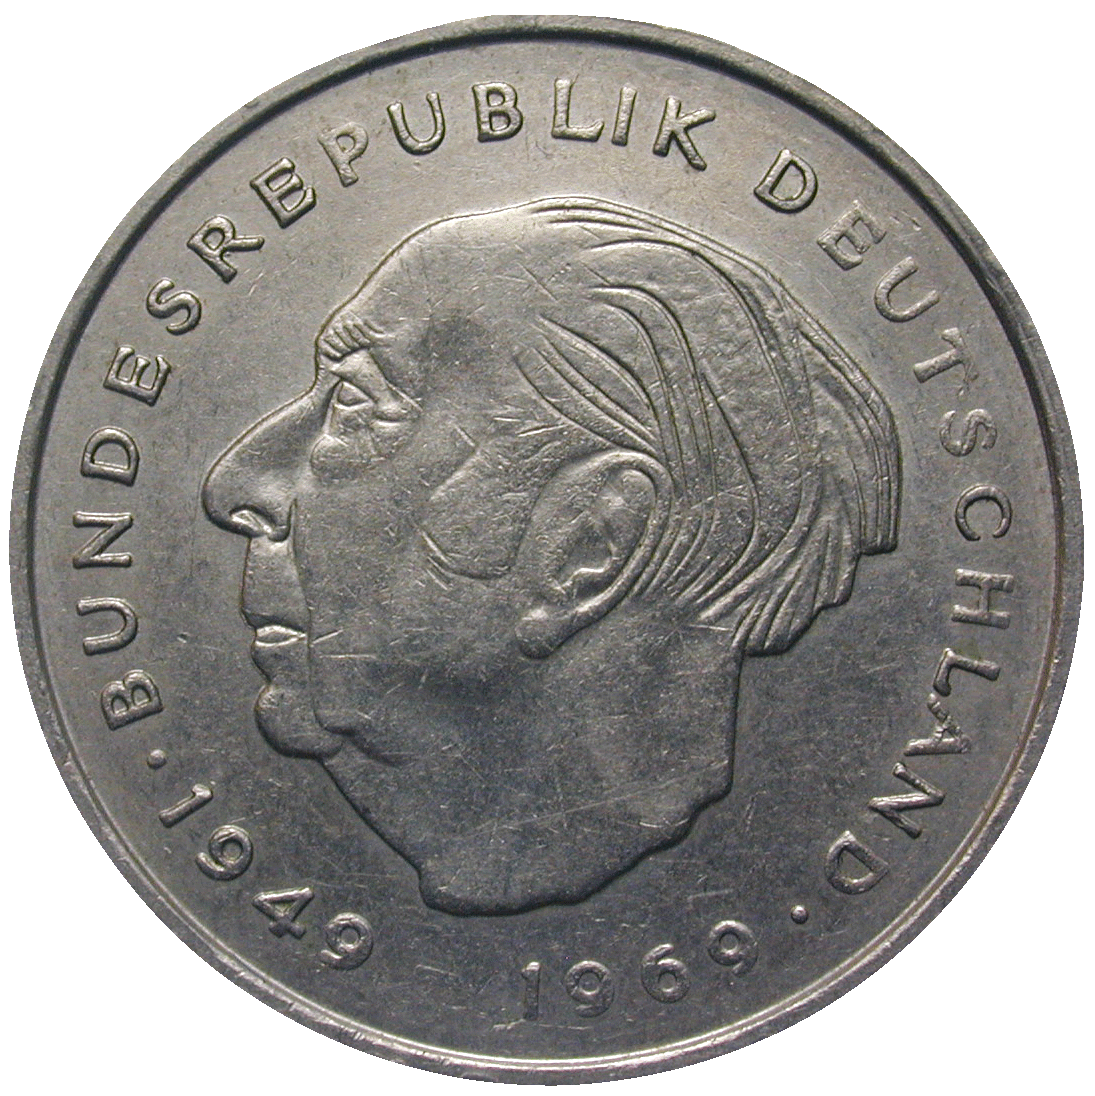 Federal Republic of Germany, 2 Deutsche Mark 1970 (reverse)